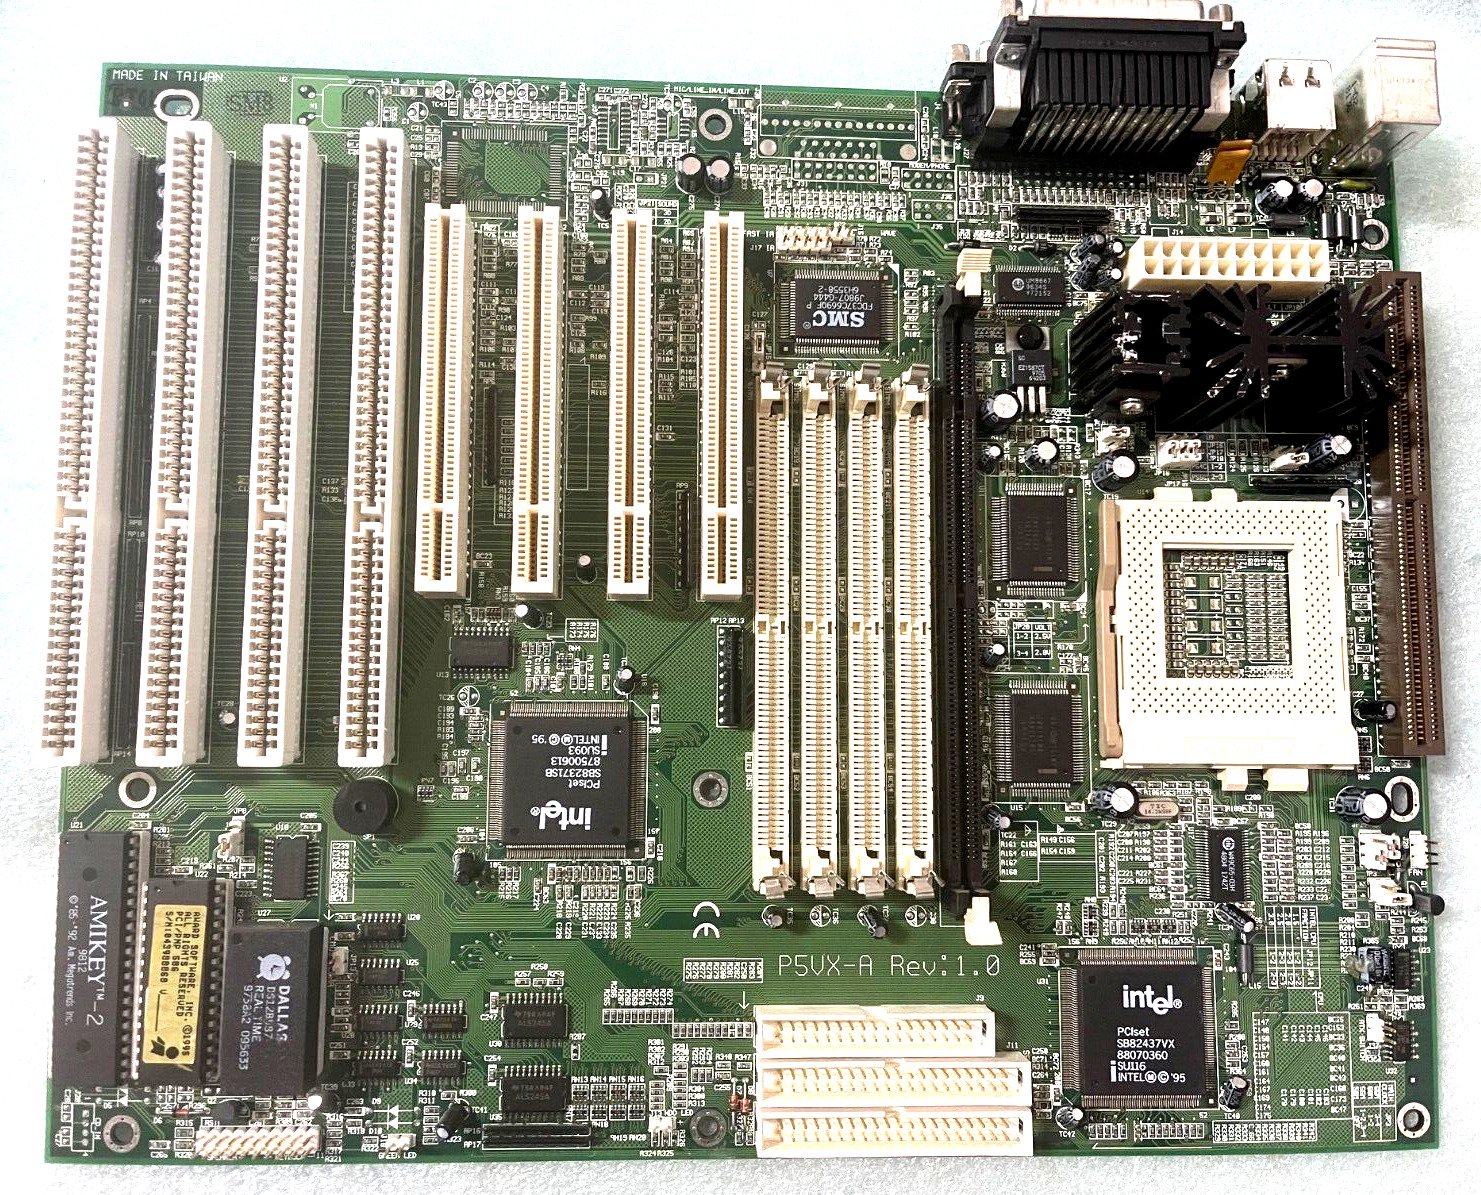 RARE VINTAGE ECS P5VX-A R1.0 INTEL PCI CHIPSET SOCKET 7 ATX MOTHERBOARD MBMX23